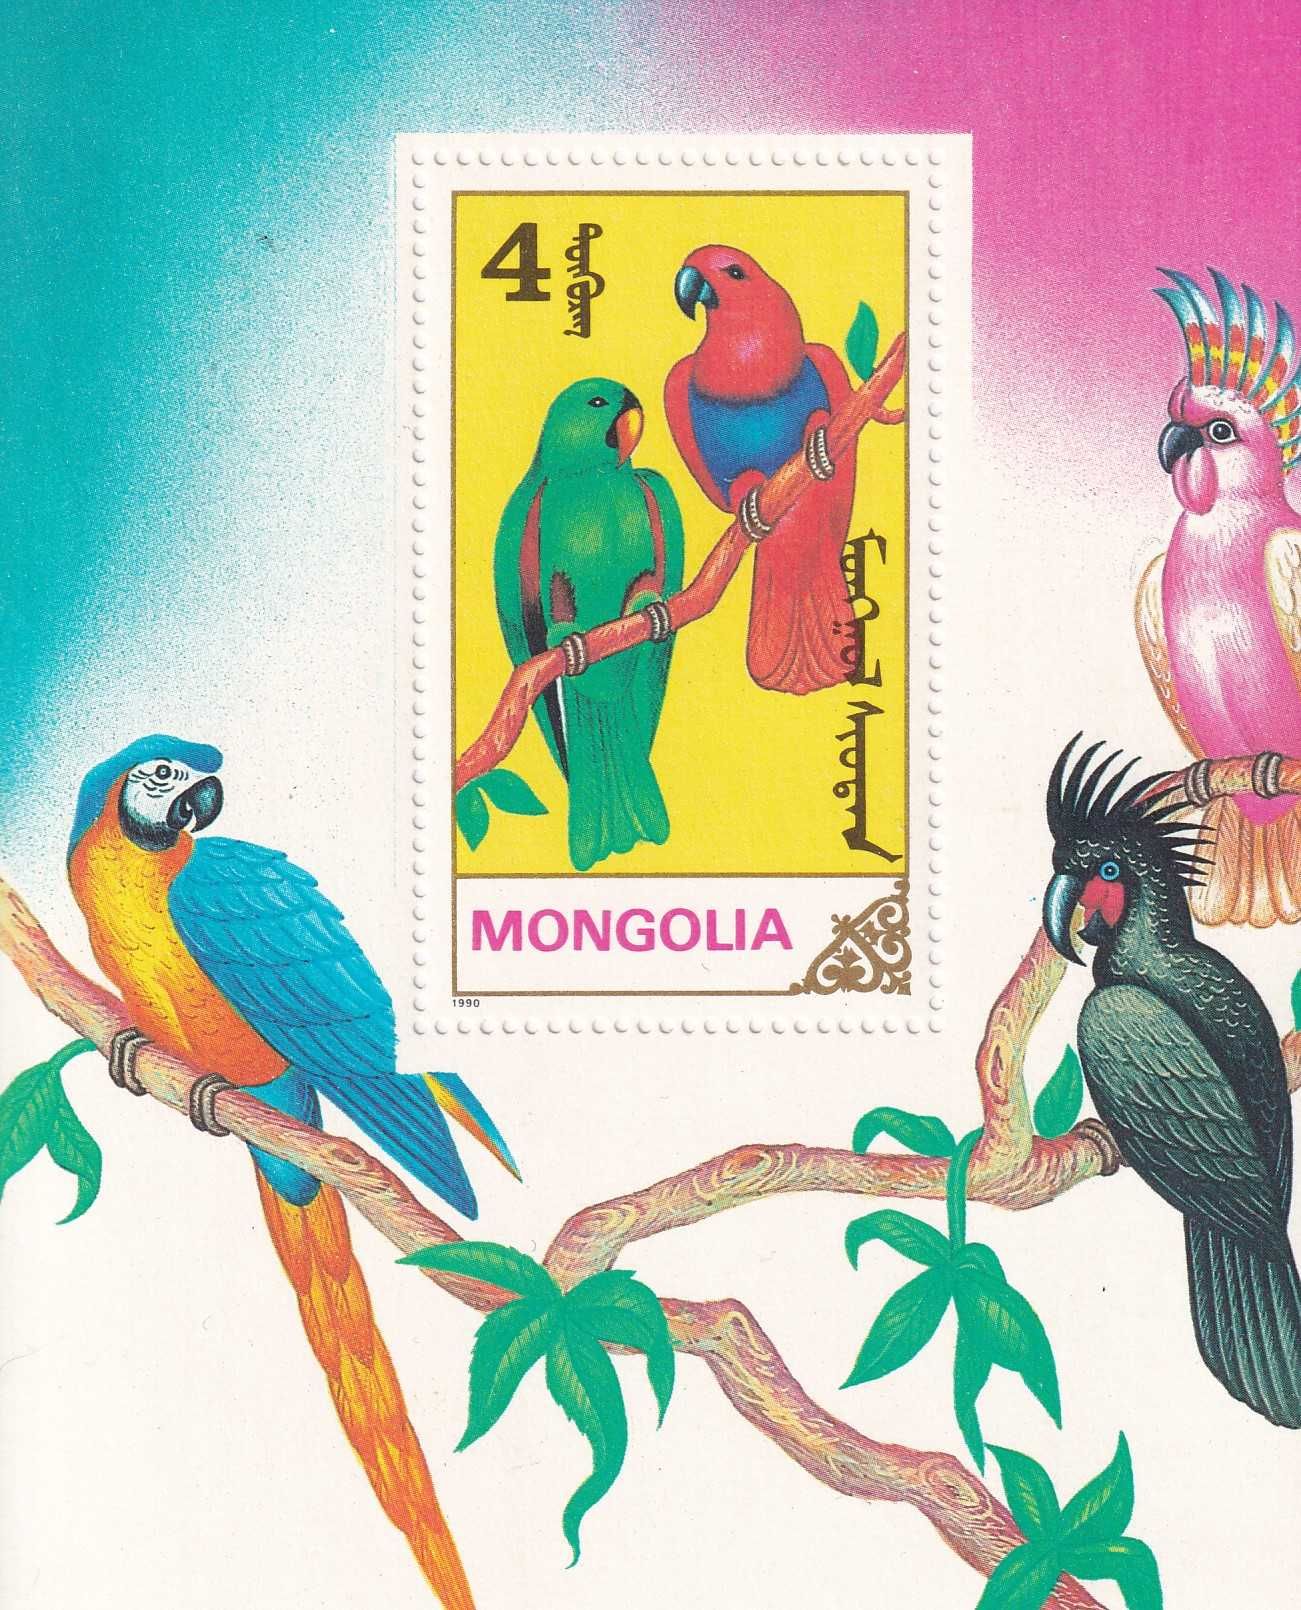 Mongolia 1990 cena 4,90 zł kat.5€ - papugi